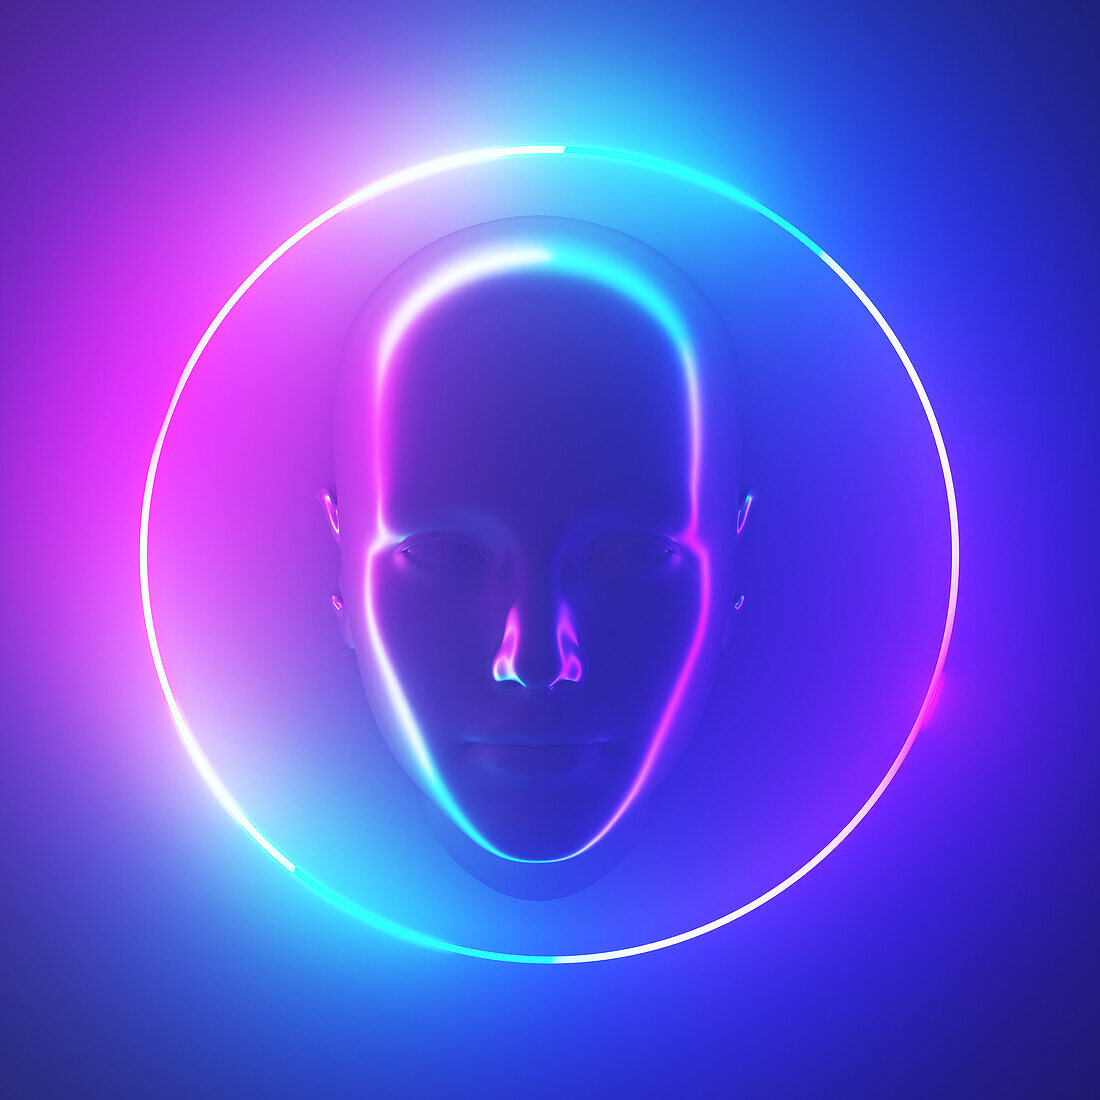 Metal face in neon light, illustration